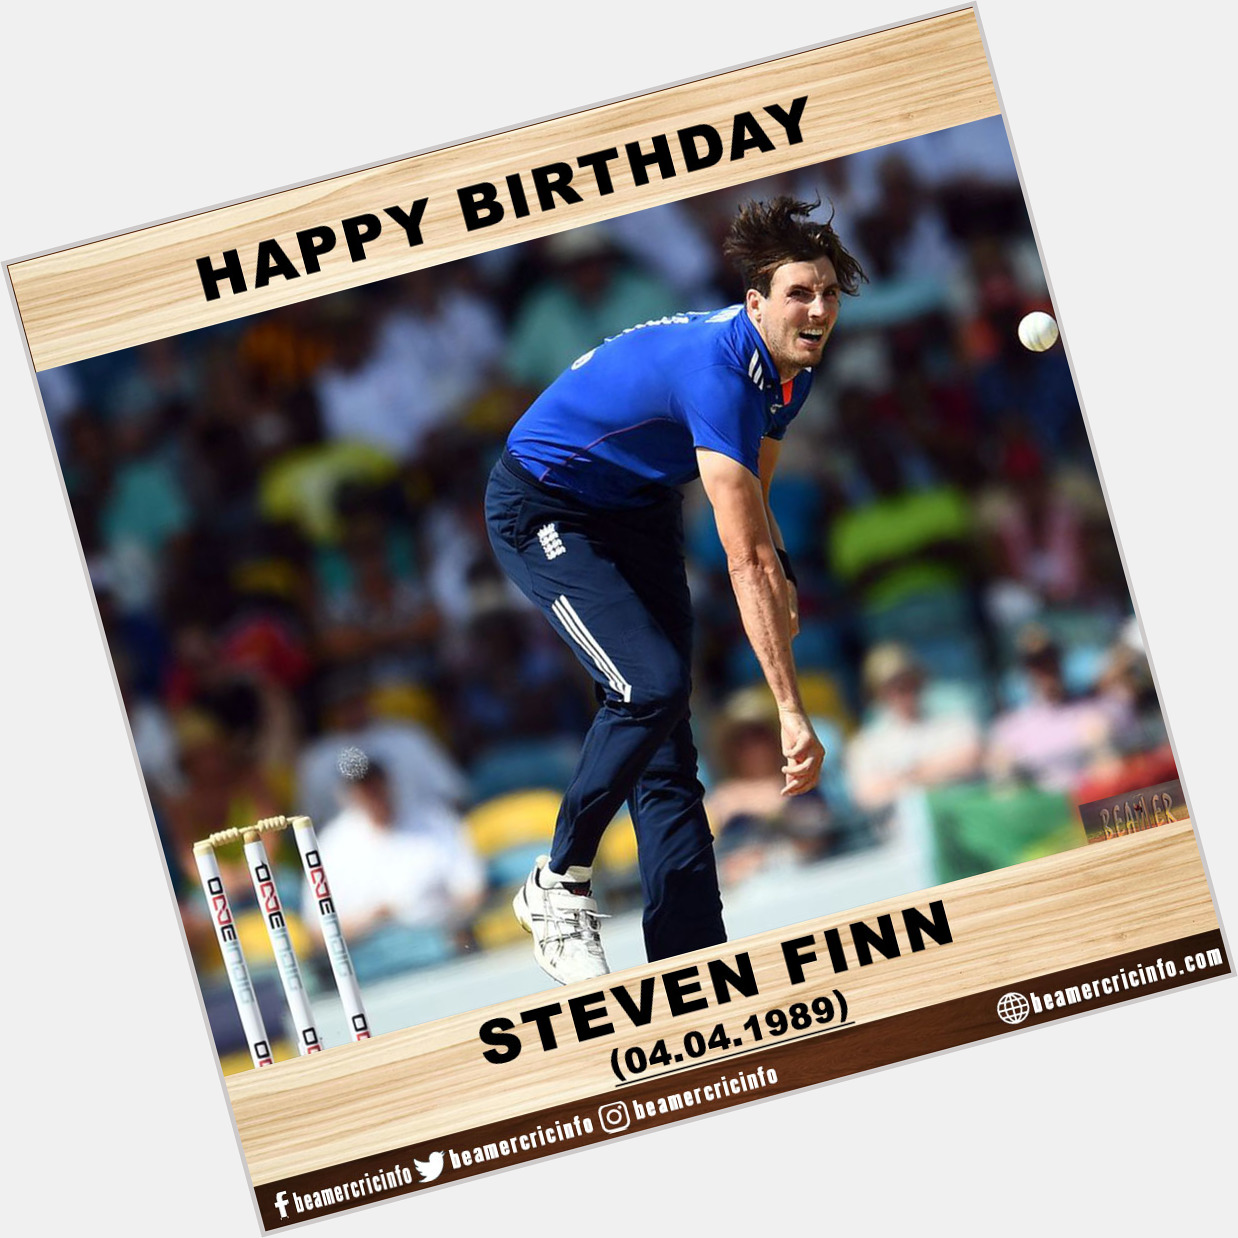 Happy Birthday!!!
Steven Finn...      